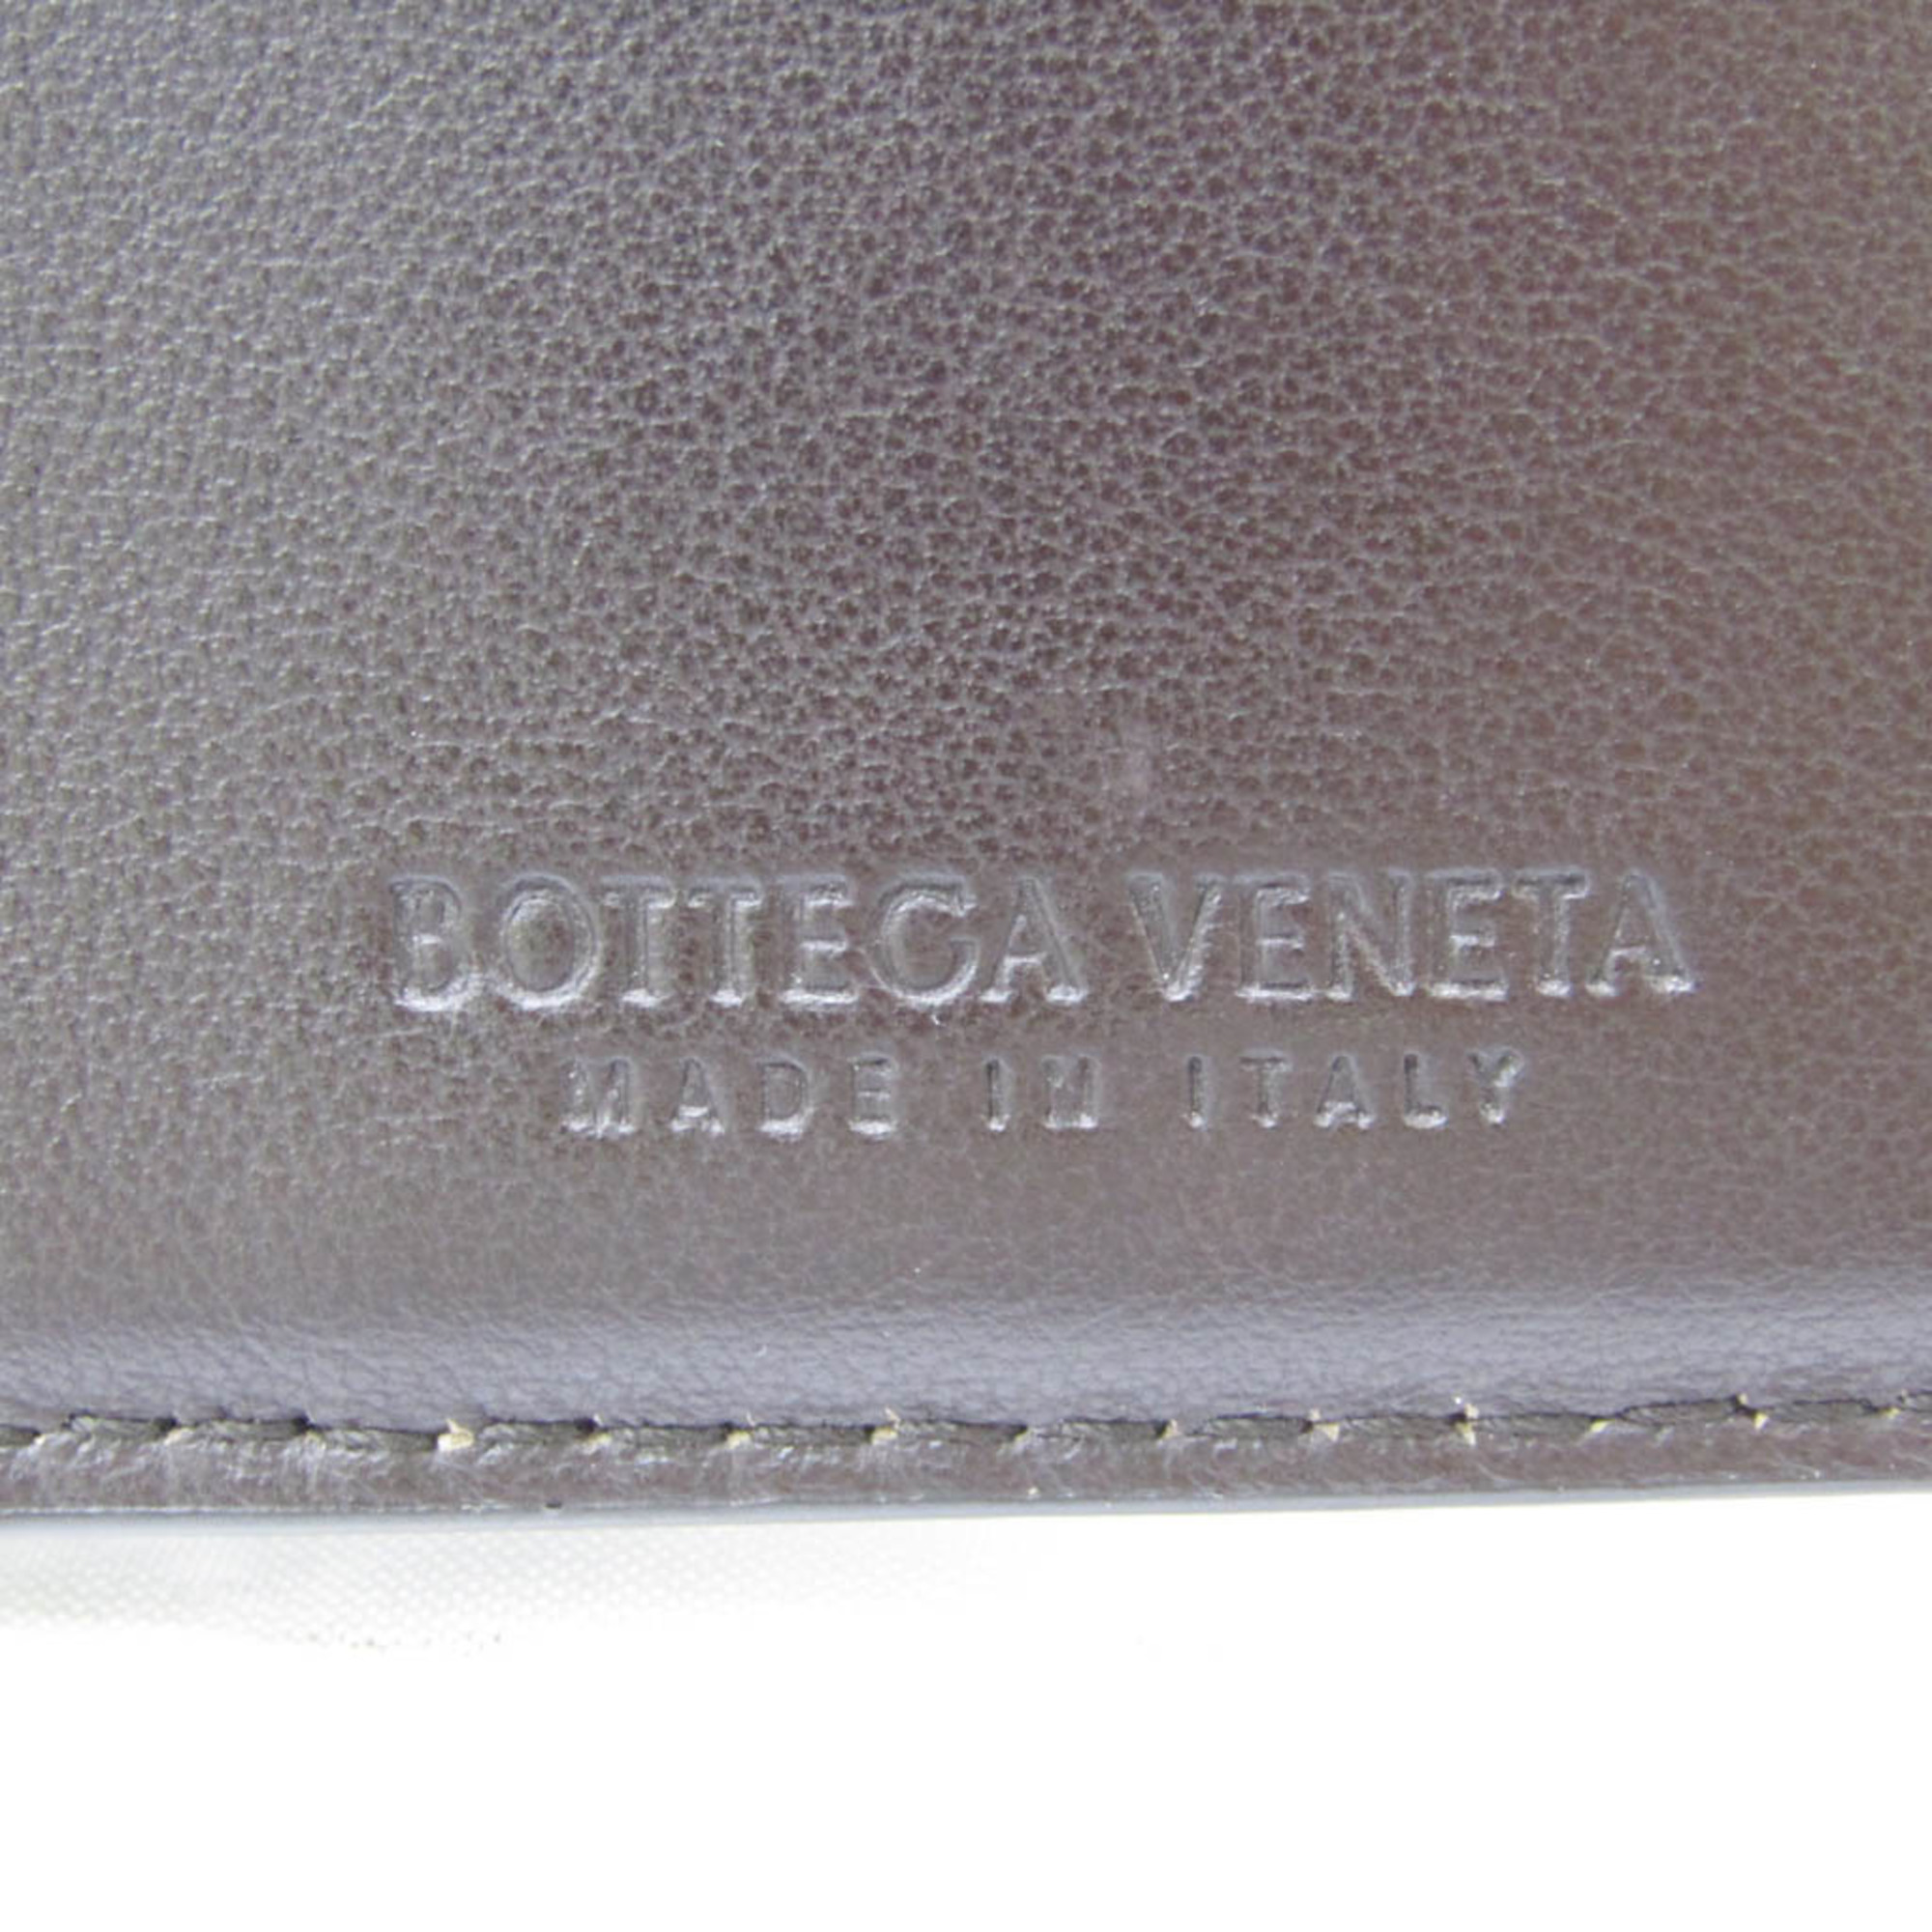 Bottega Veneta Intrecciato 605722 Women's Leather Wallet (tri-fold) Dark Brown